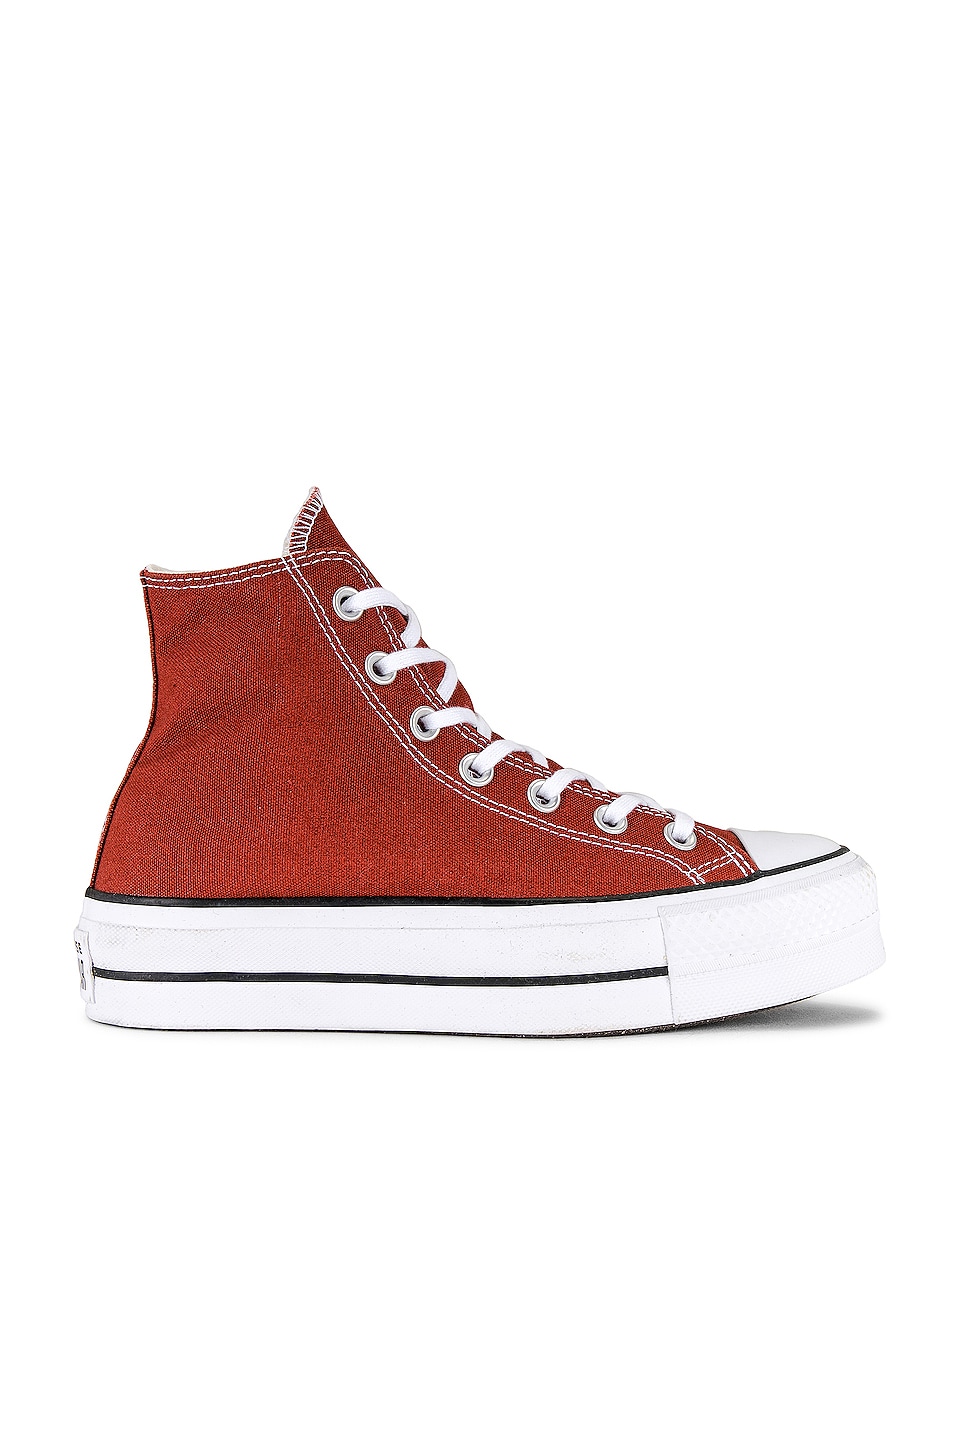 Converse Chuck Taylor All Star Lift Platform Sneaker in Ritual Red, White,  & Black | REVOLVE